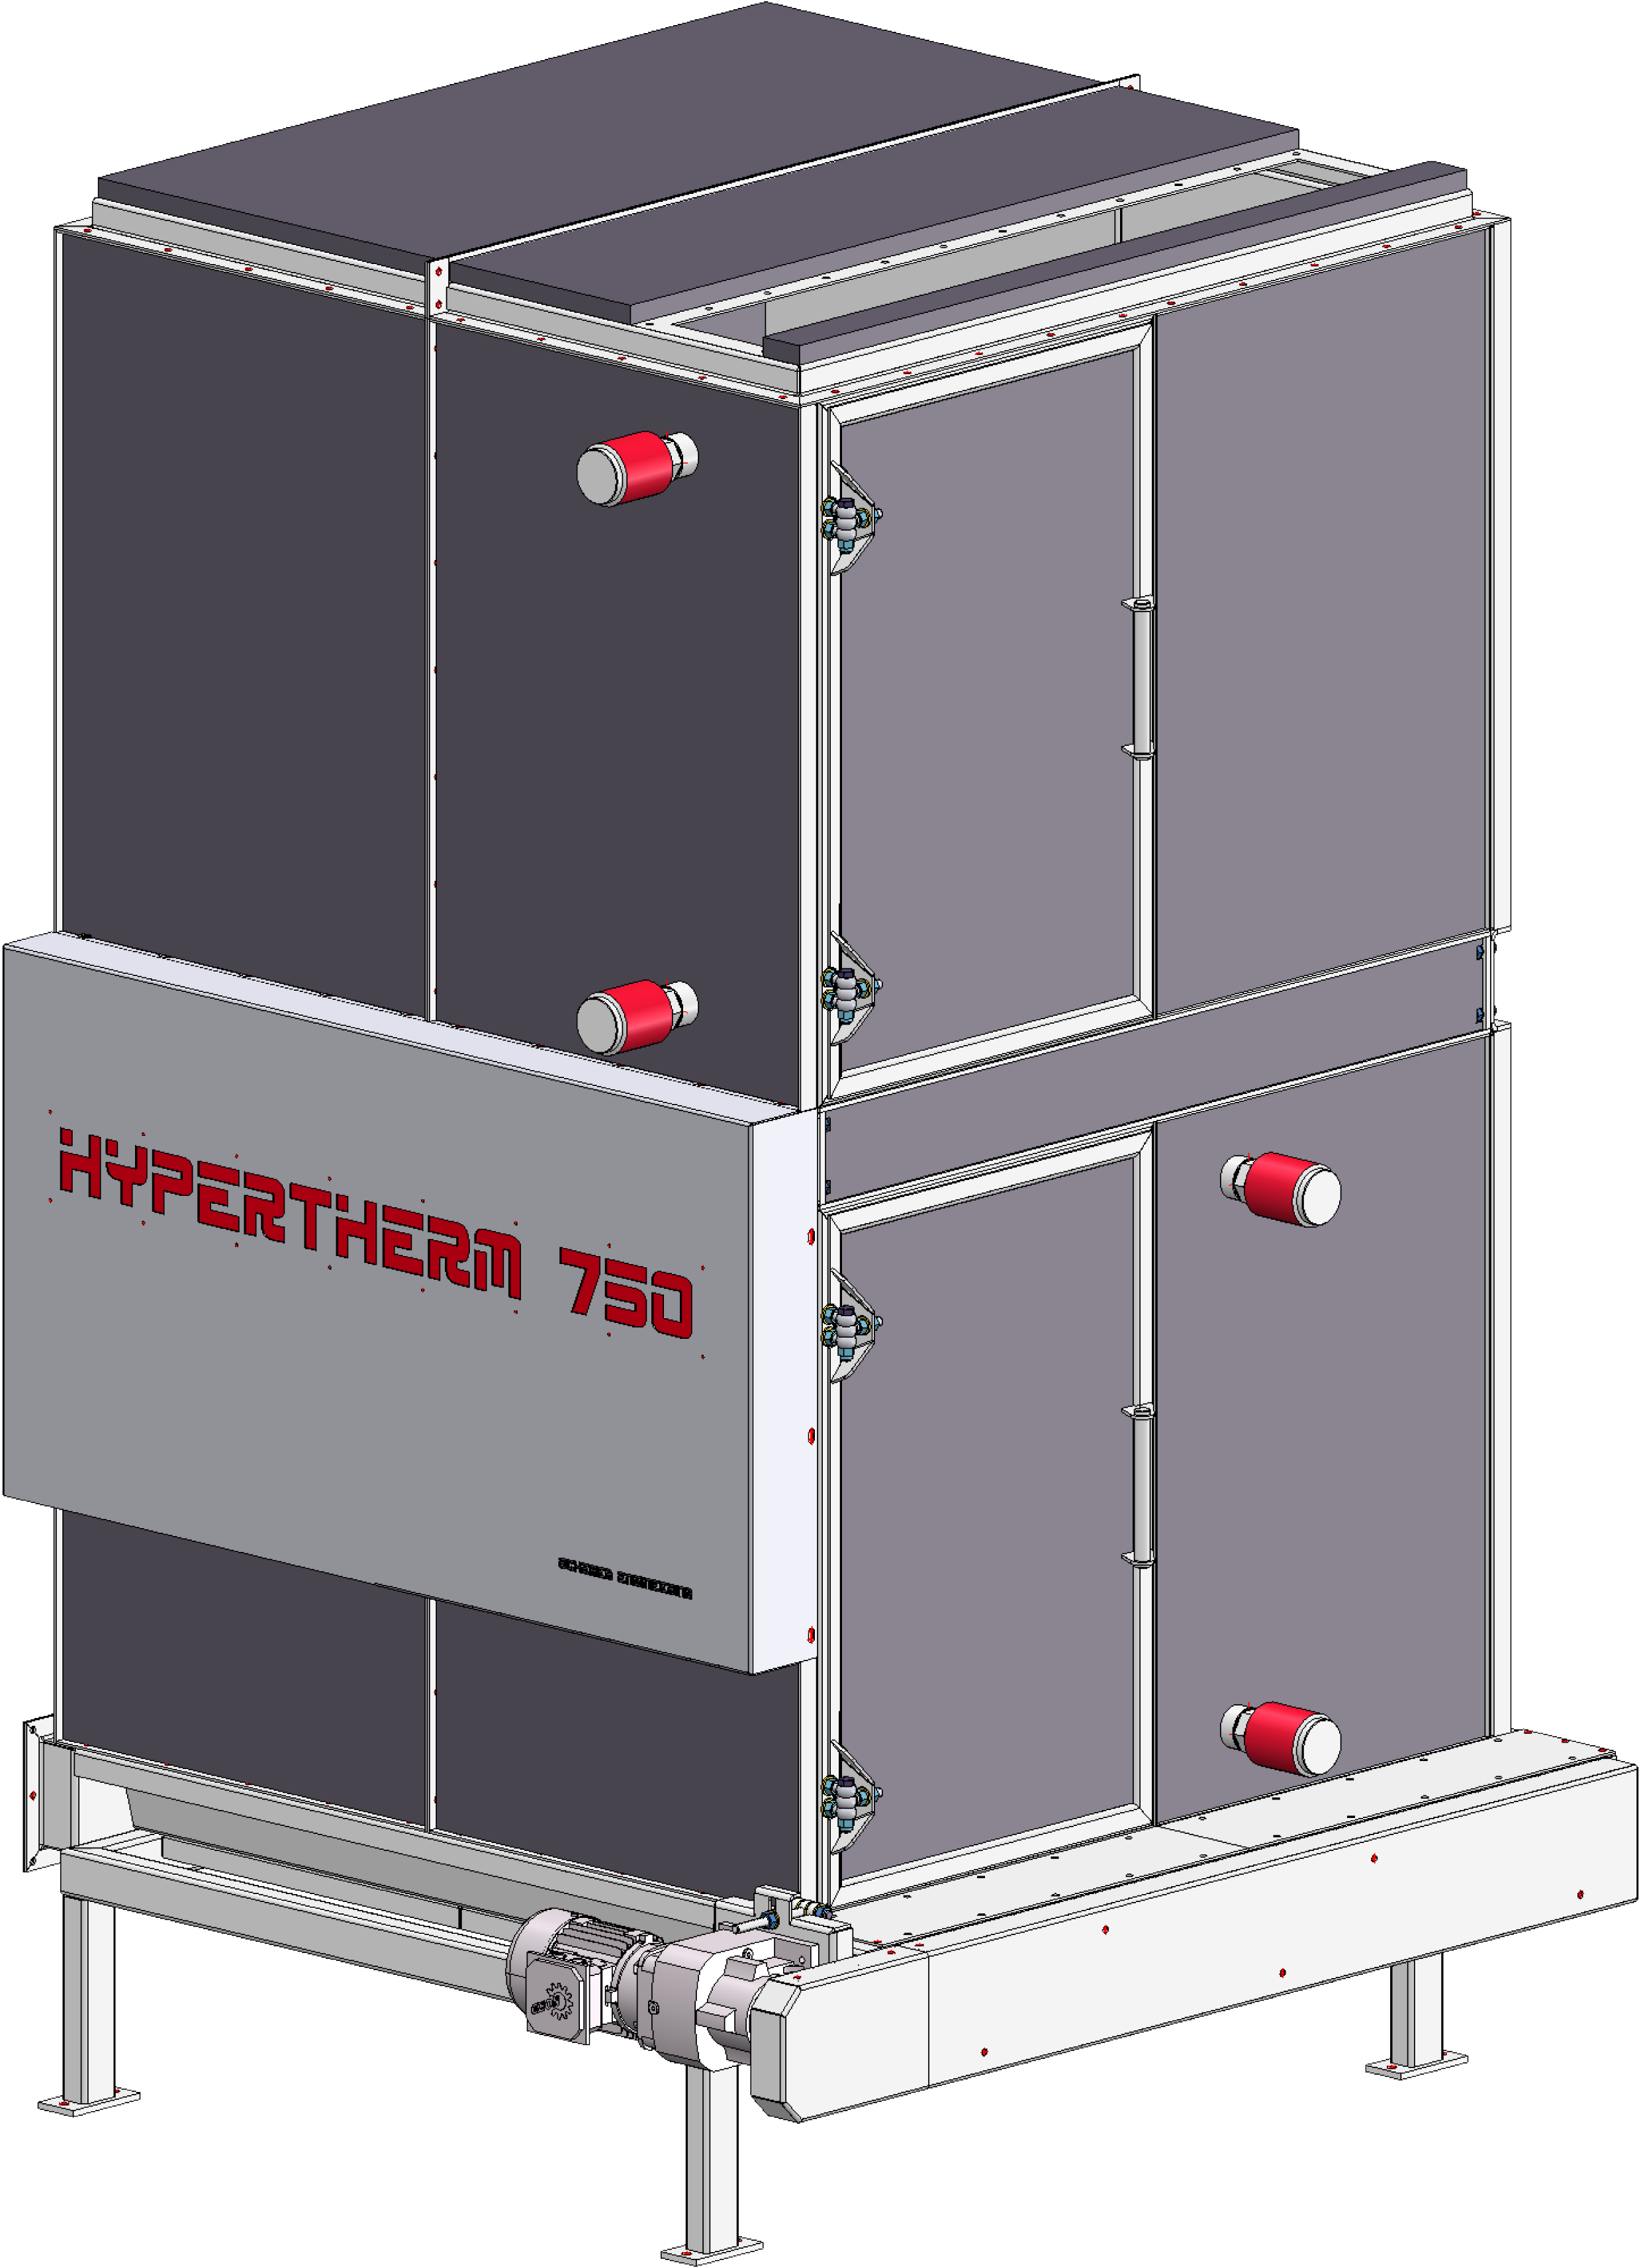 Hypertherm 750 Hygienizer